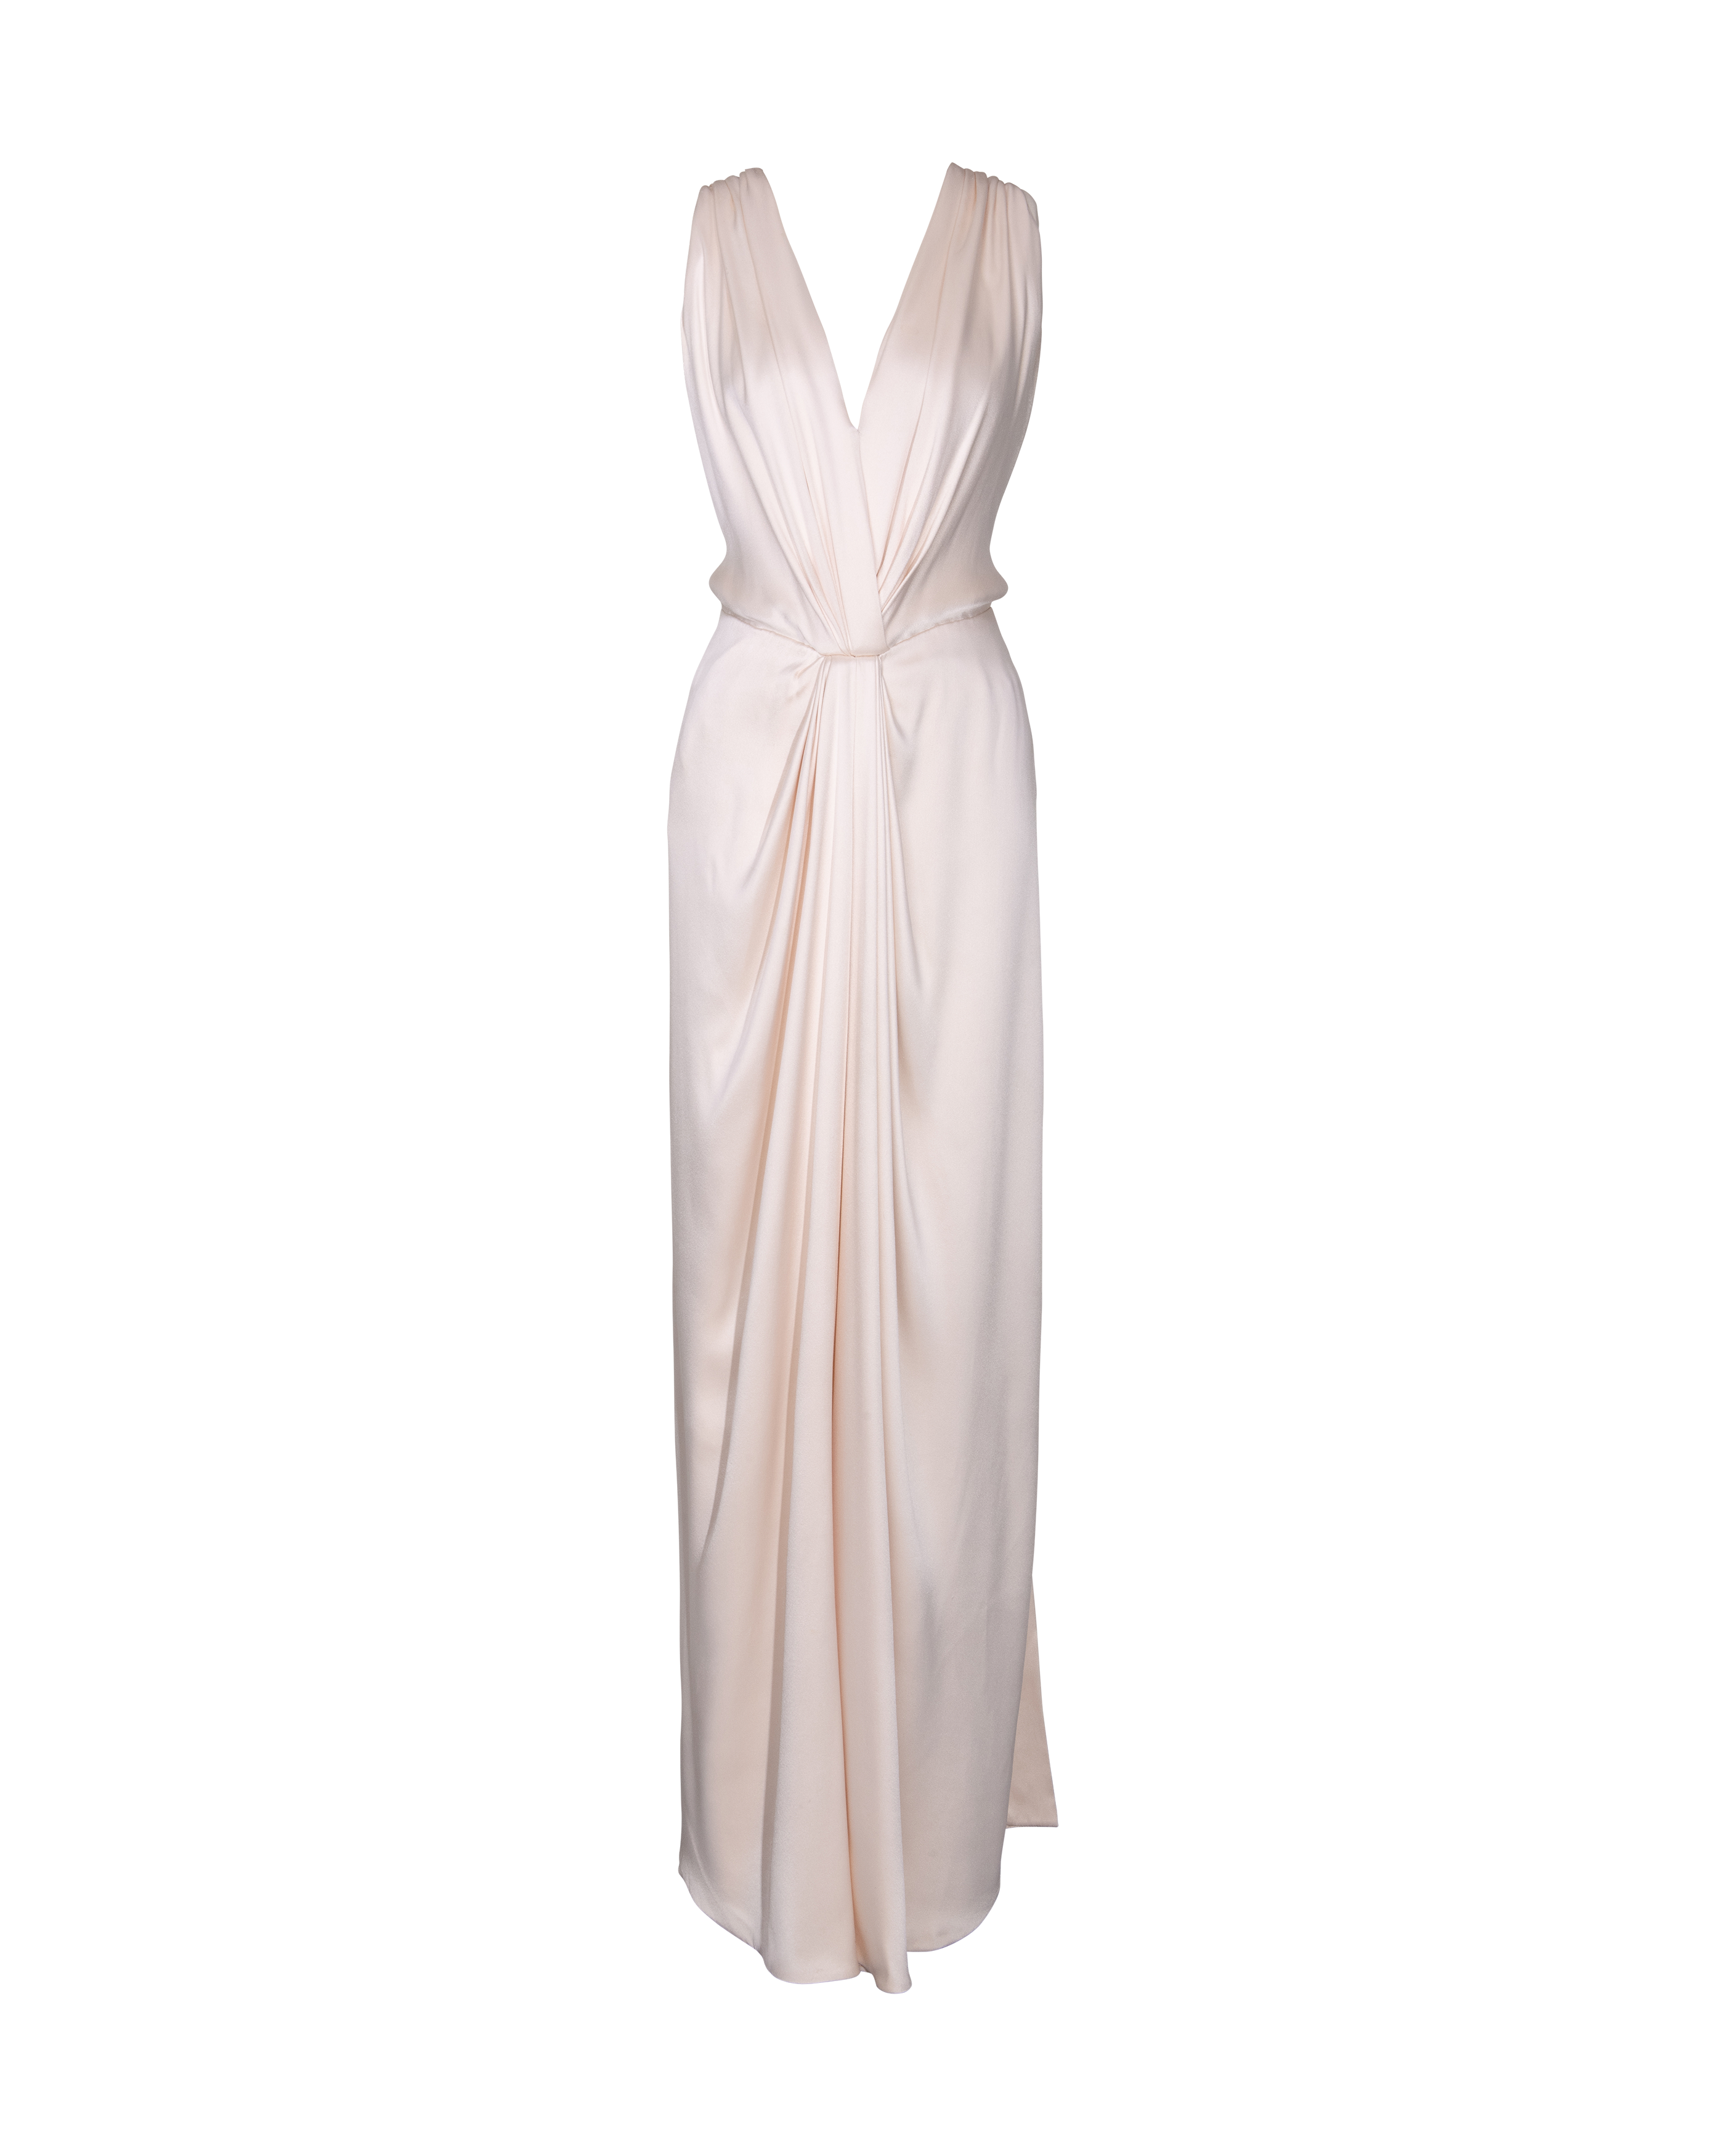 c. 1973 Haute Couture Off-White Sleeveless Drape Gown